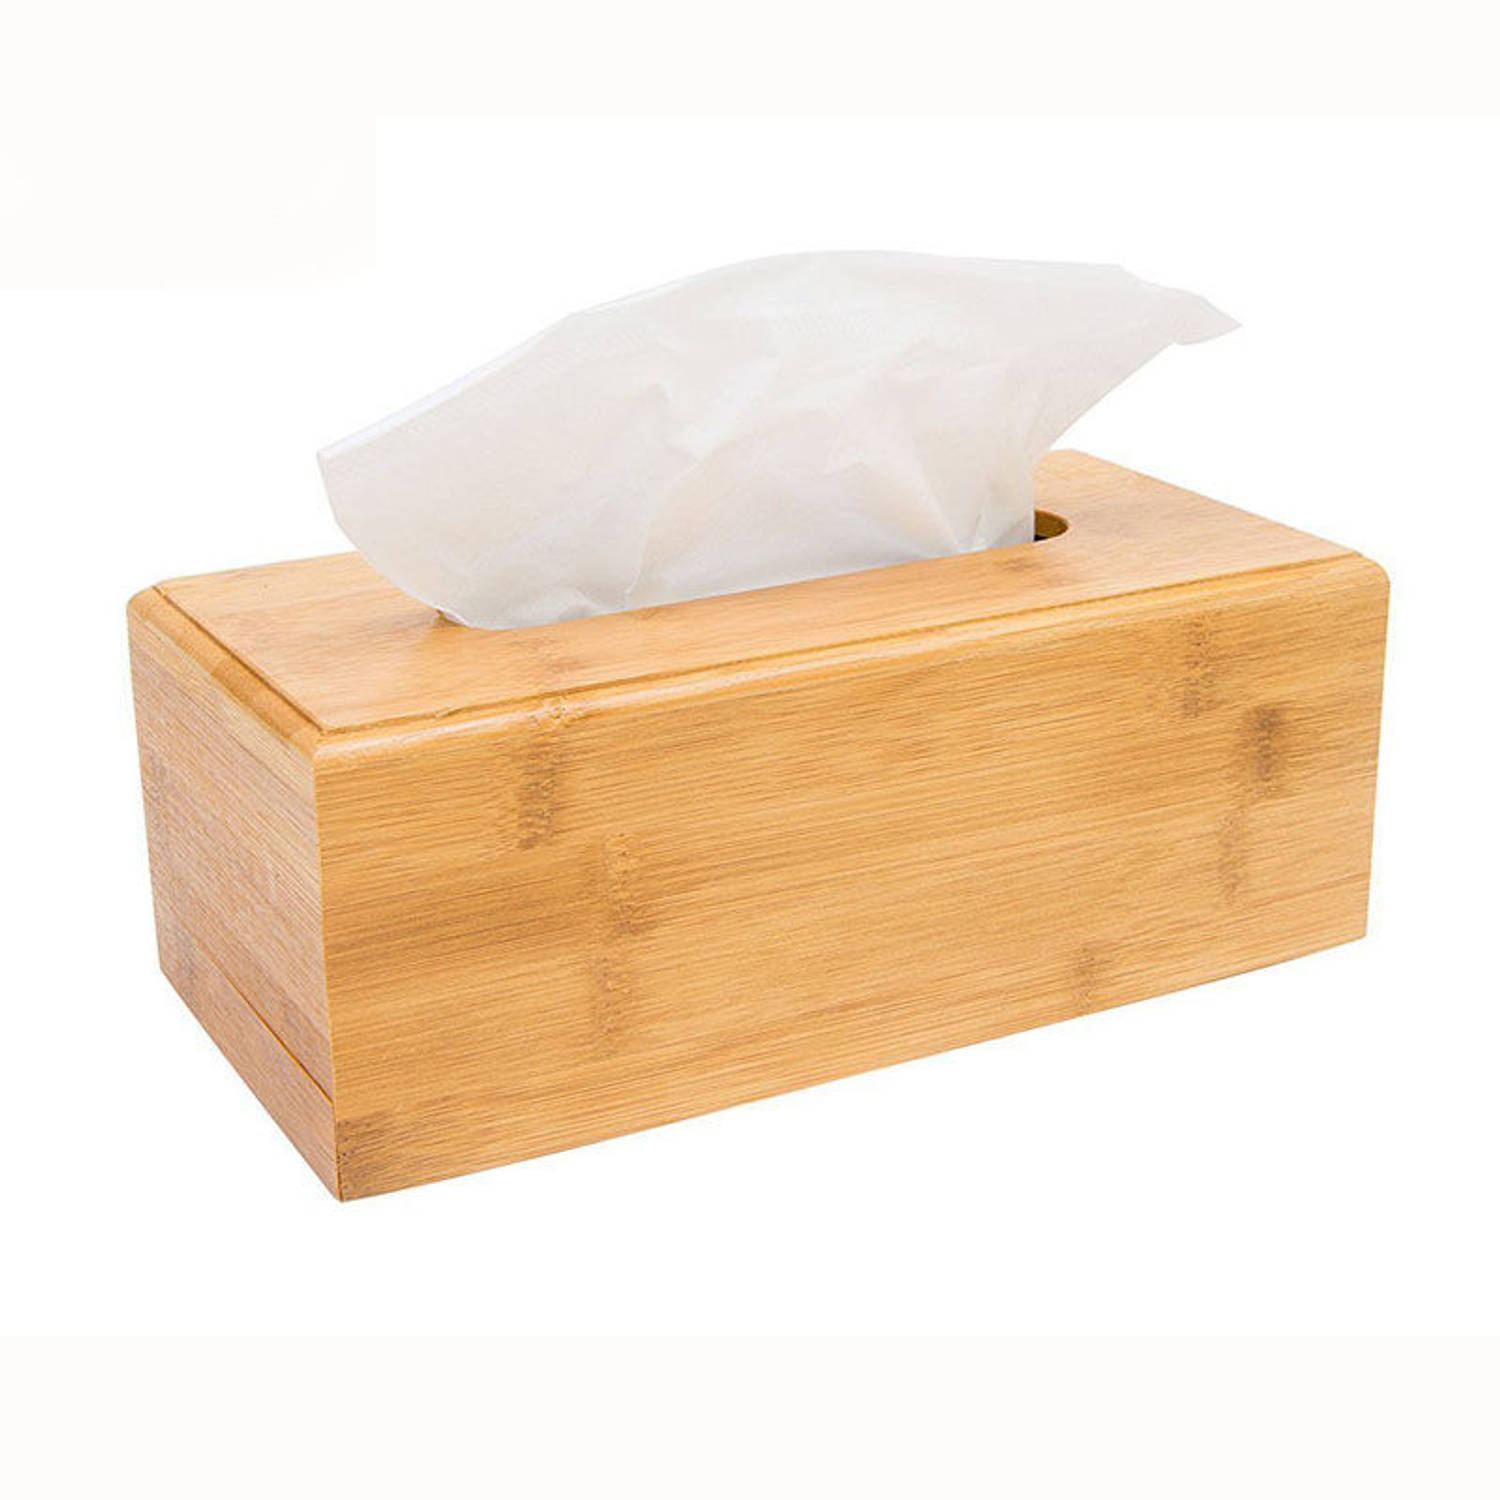 Bamboe Tissue box - Tissuehouder voor tissues - Rechthoekige